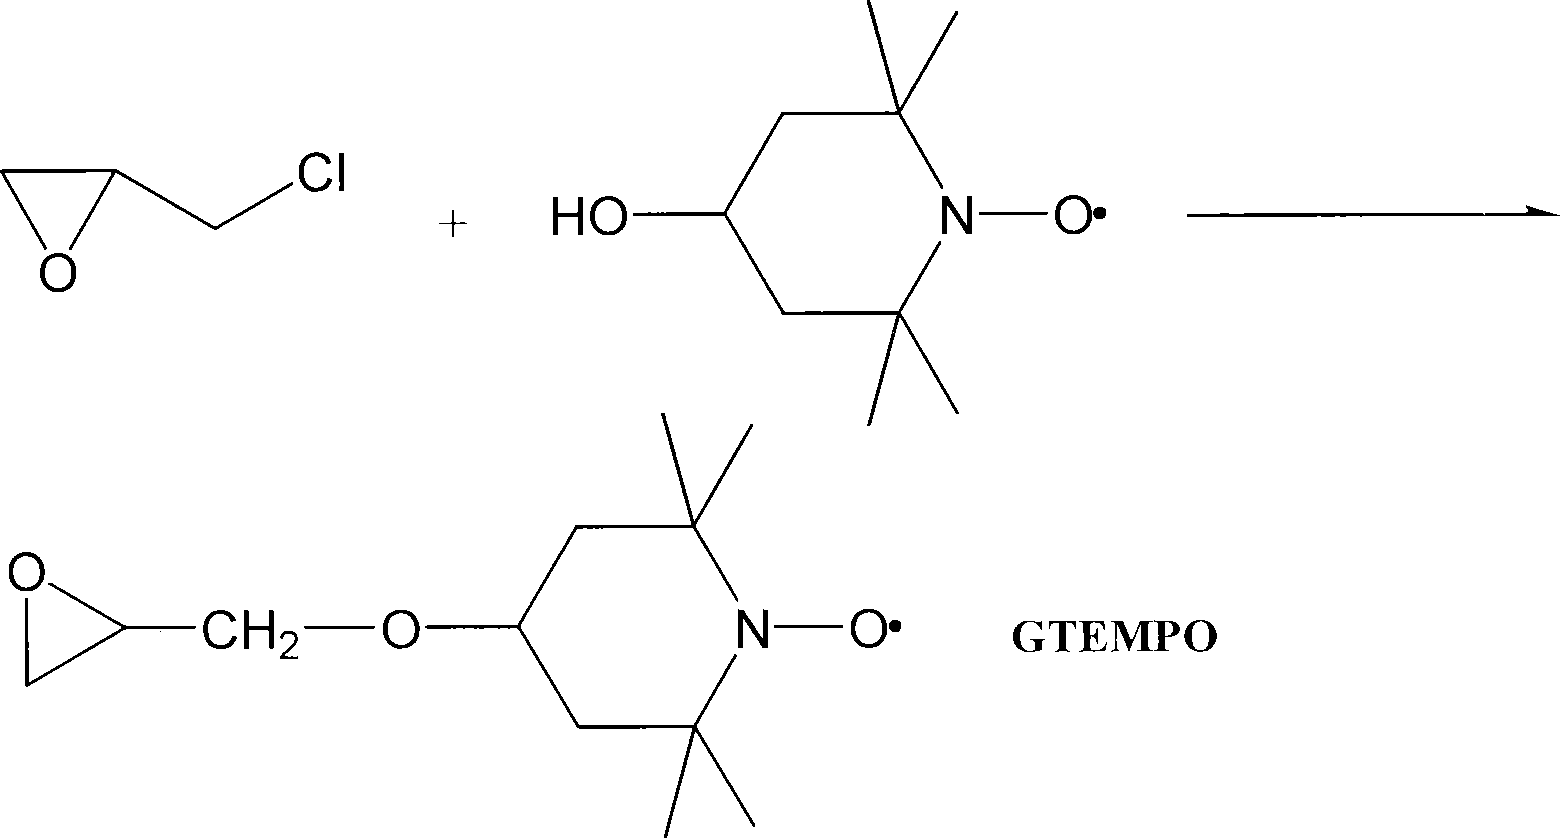 Amphiphilic macrocyclic polymer and preparation method